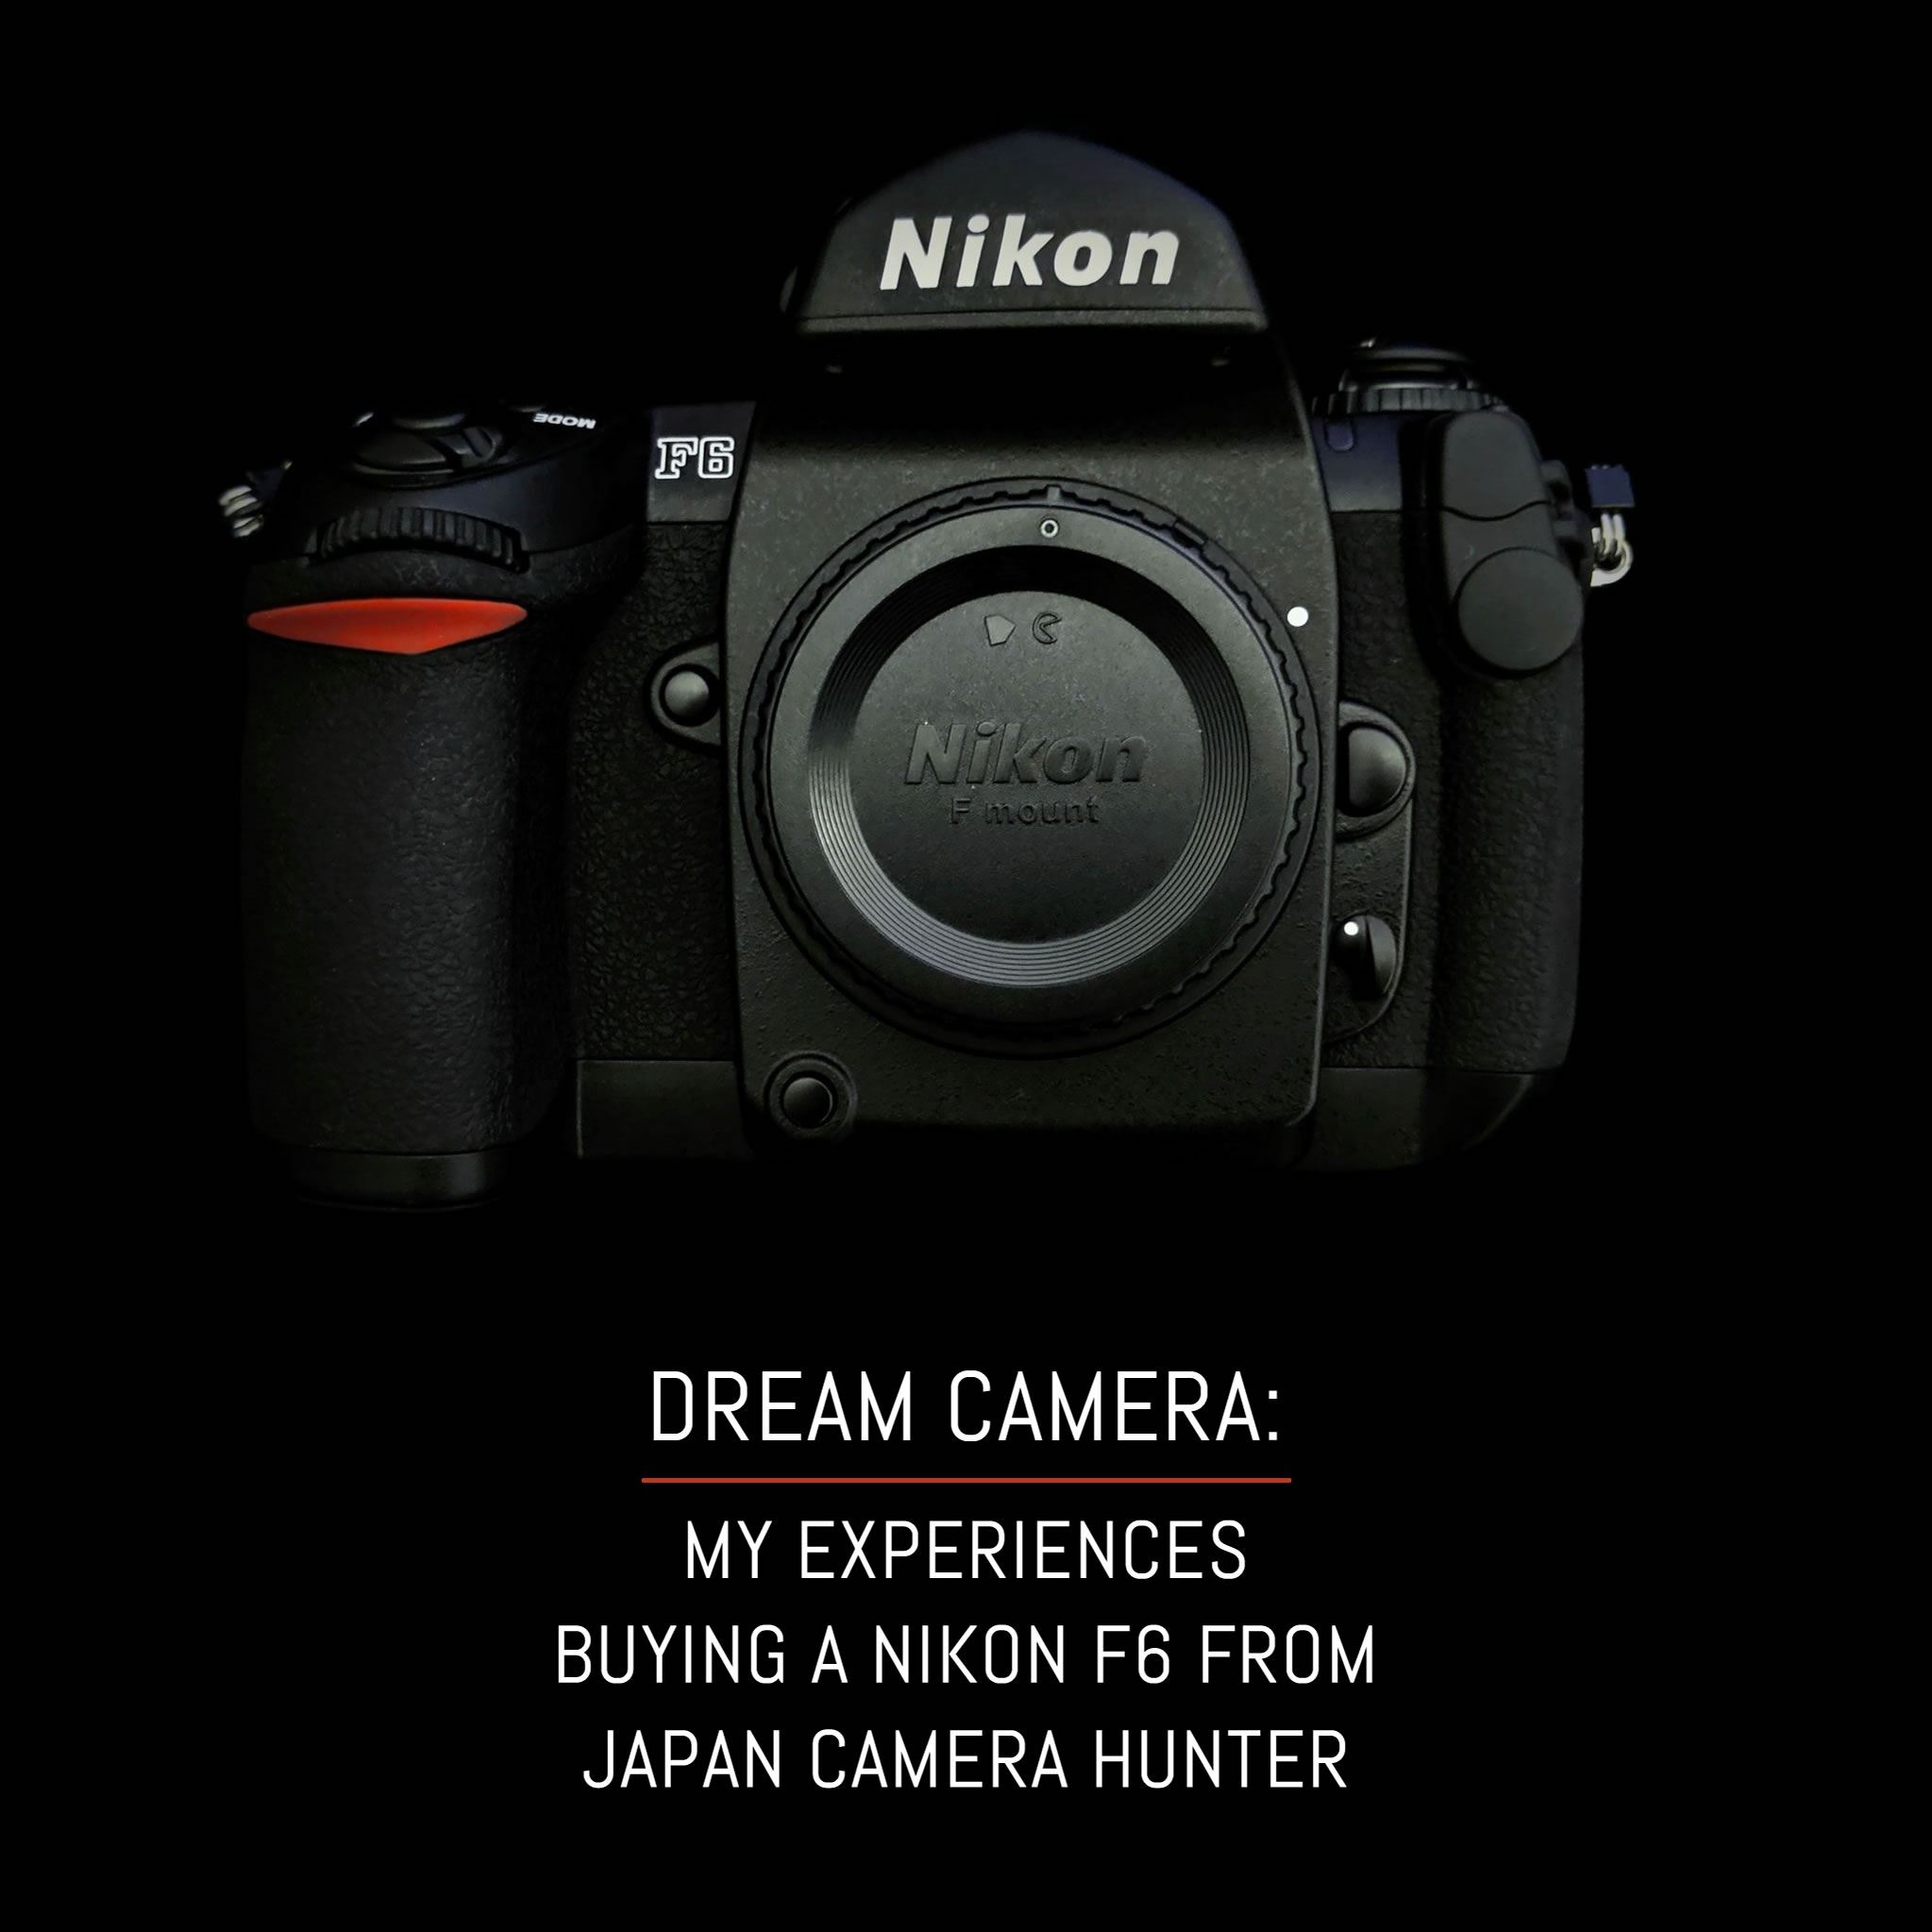 Dream camera: My experiences buying a Nikon F6 from Japan Camera